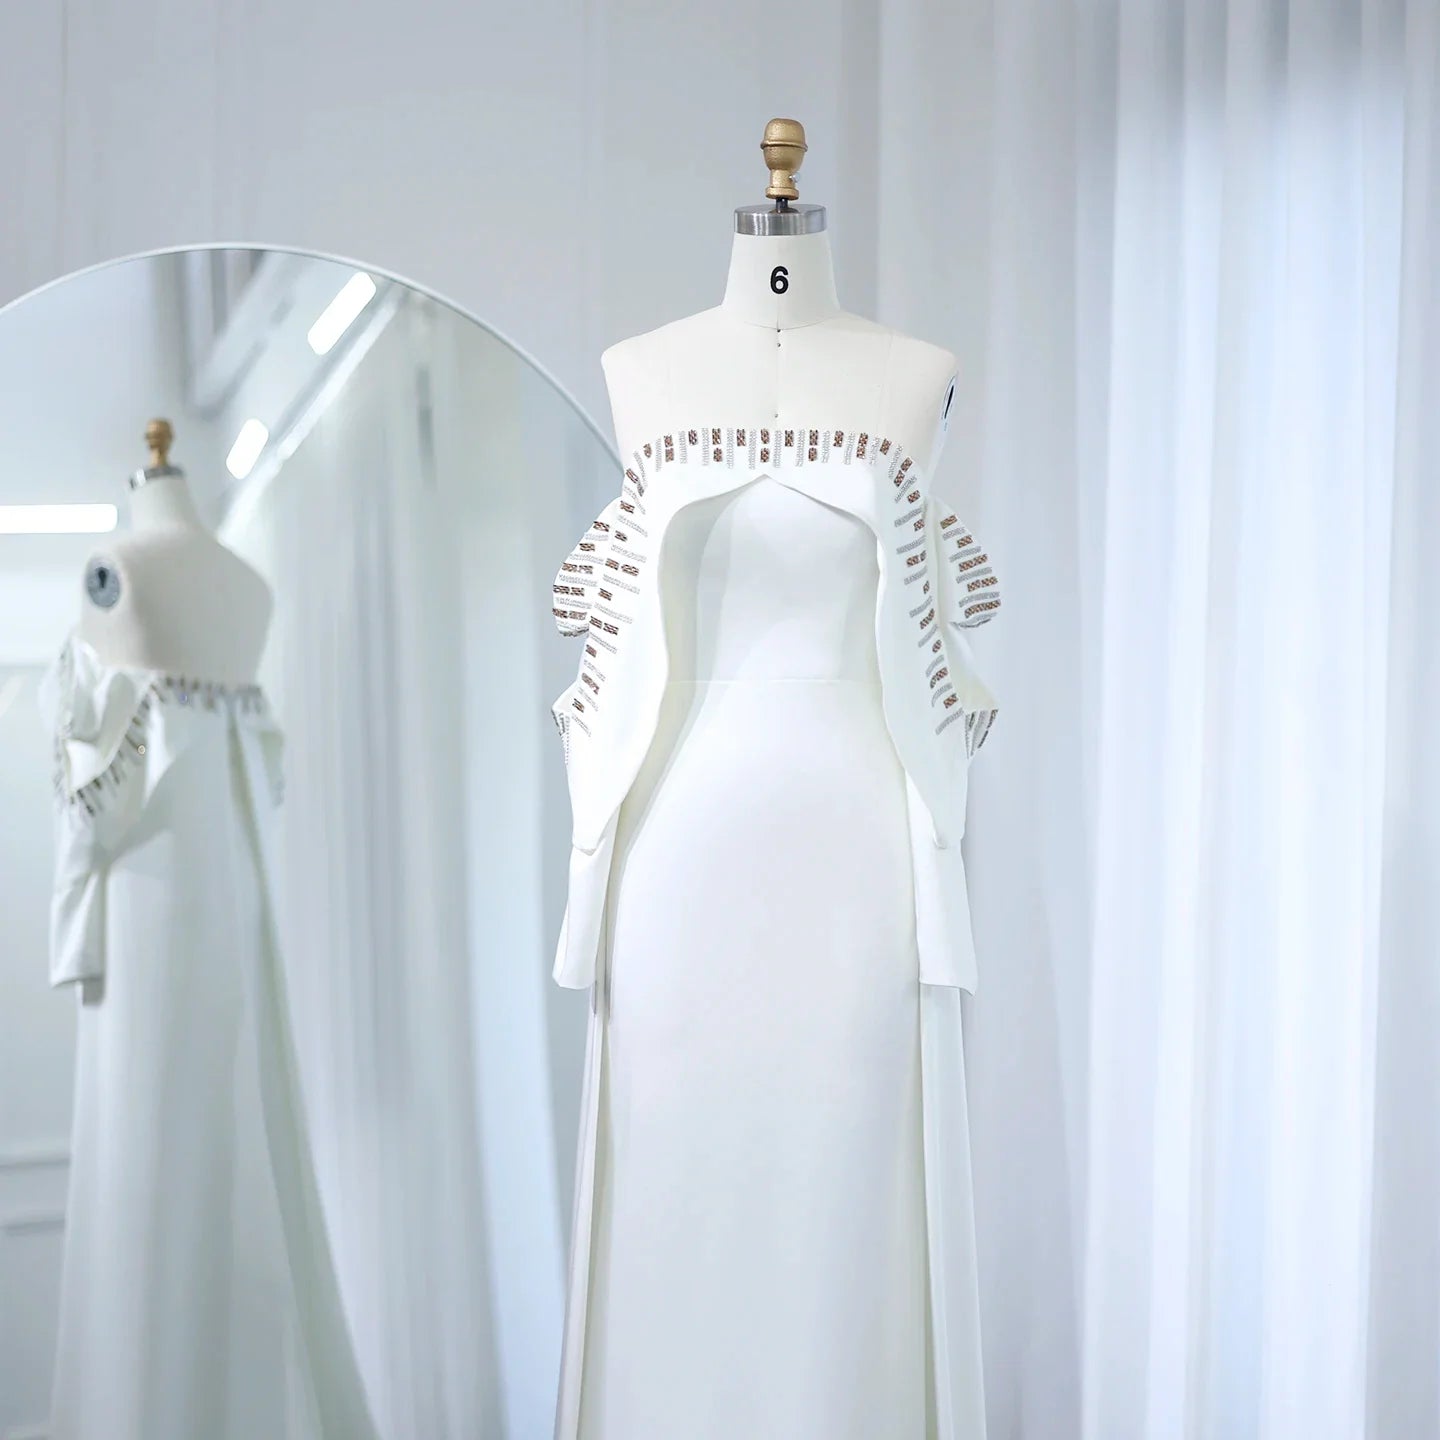 Gaun malam dubai dubai putih yang elegan dengan lengan panjang cape long dari bahu Arab Pesta Pesta